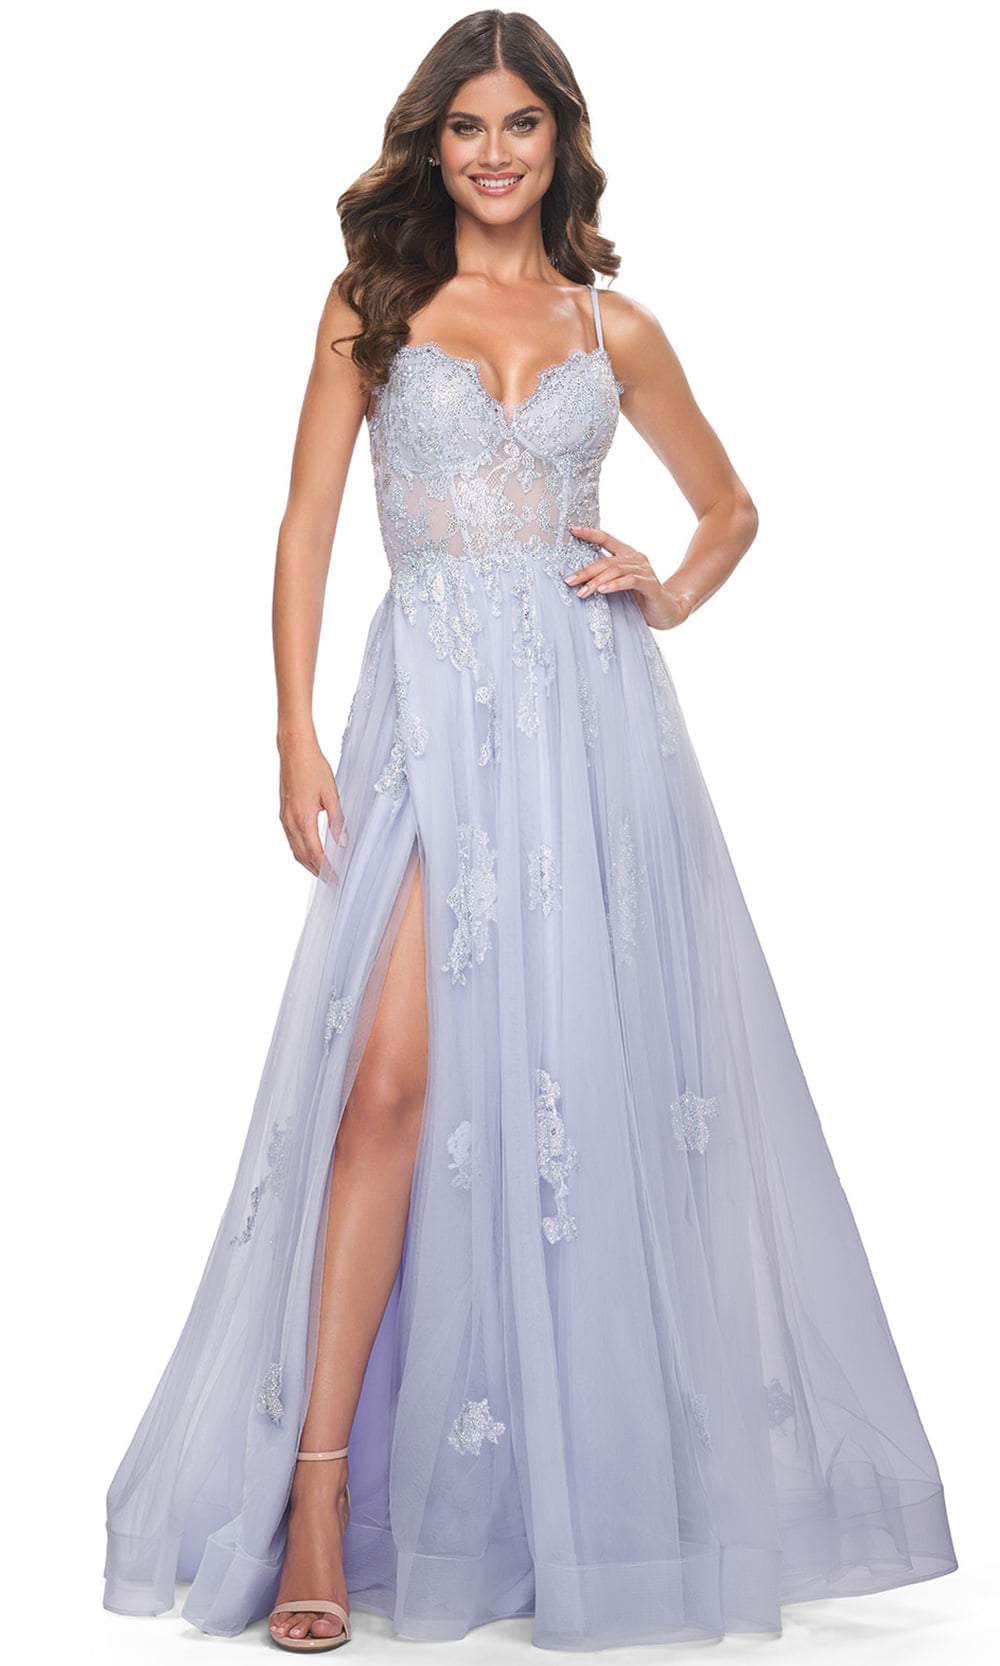 La Femme 32028 - High Slit Lace Prom Dress Special Occasion Dress 00 / Light Periwinkle